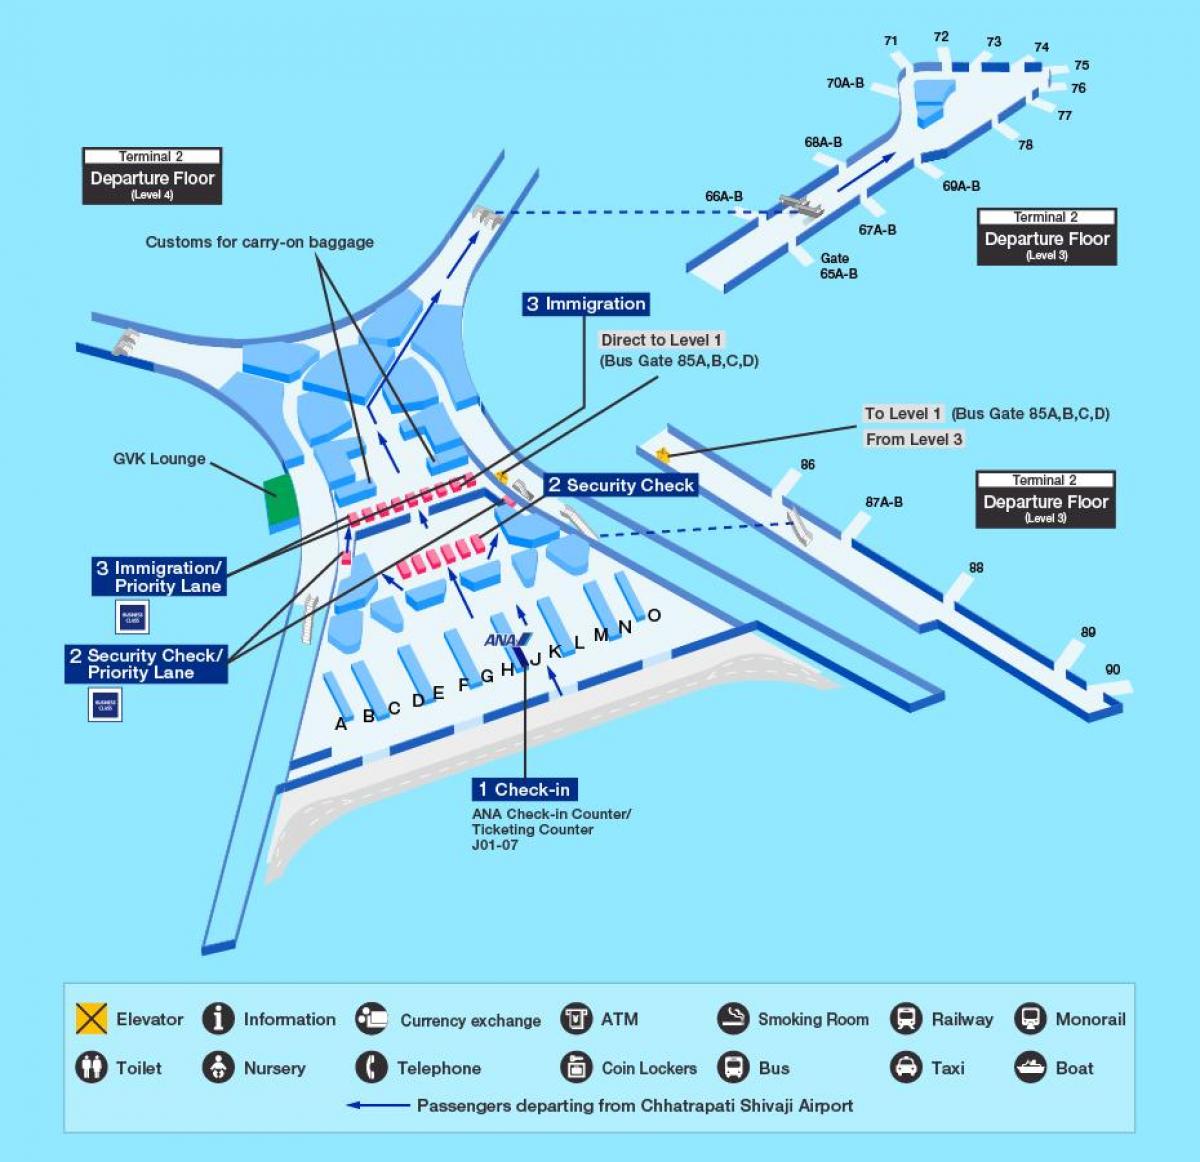 Mumbai international airport terminal 2 map